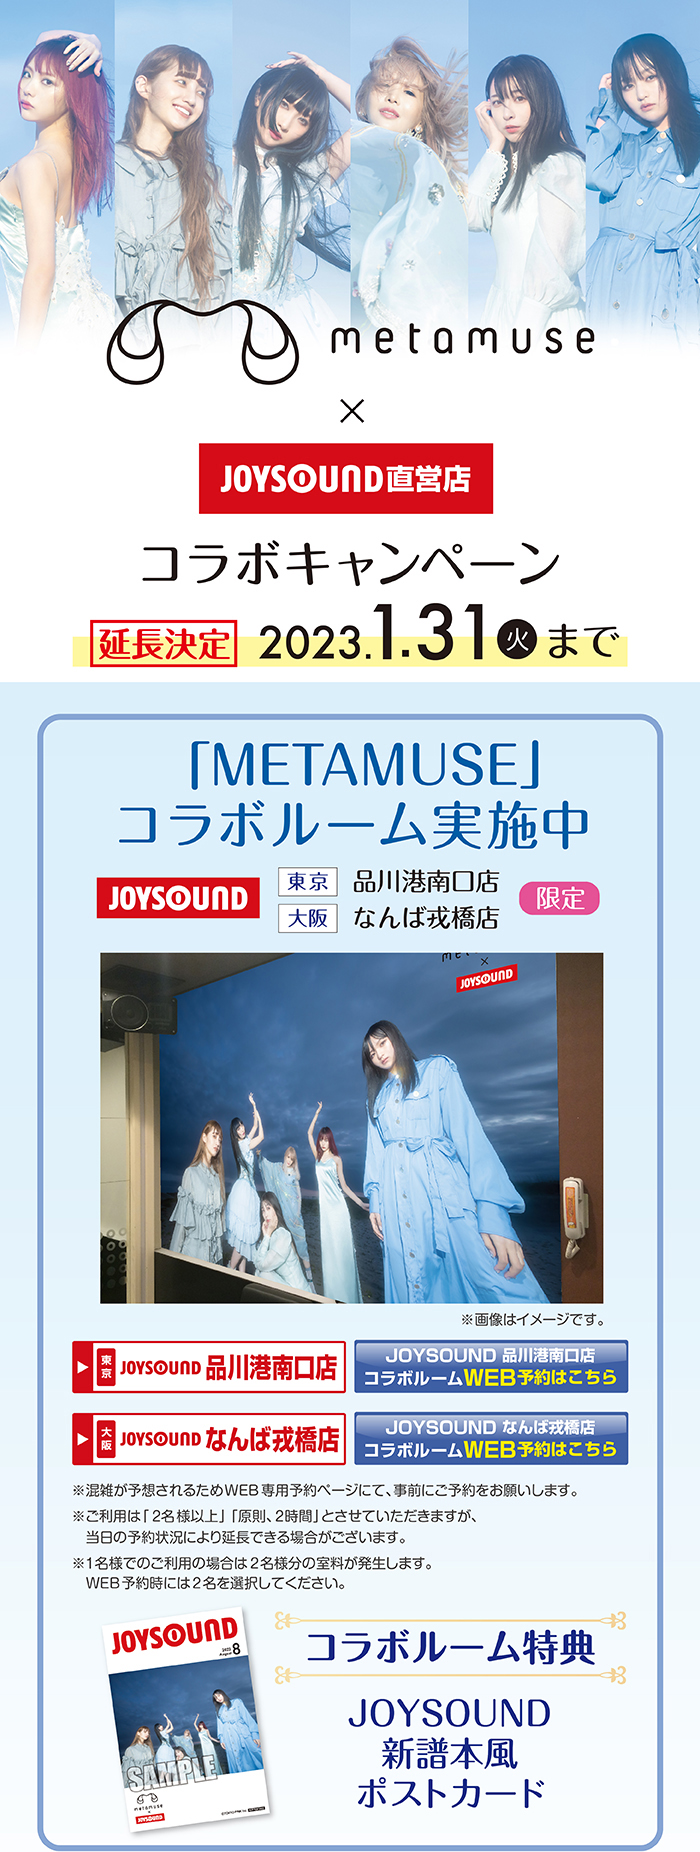 METAMUSE×JOYSOUND直営店コラボキャンペーン